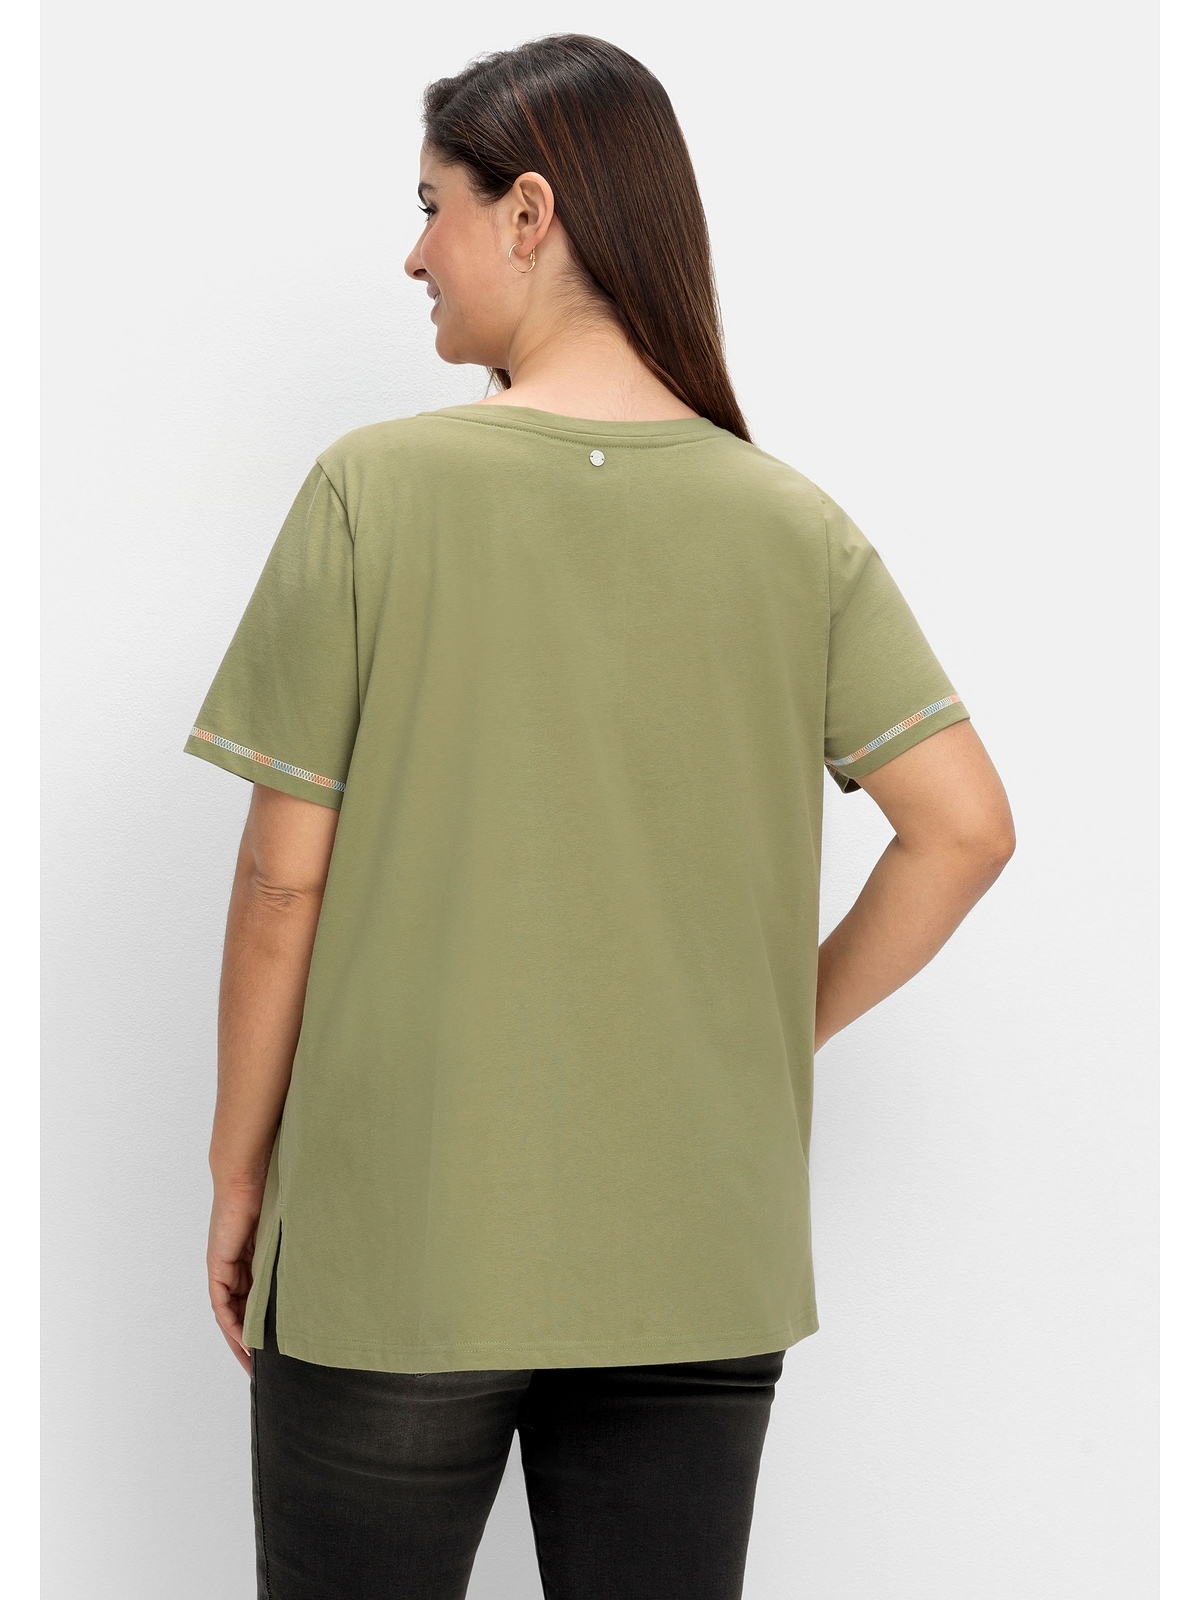 »Große Karreeausschnitt walking mit Sheego | shoppen T-Shirt I\'m Größen«,